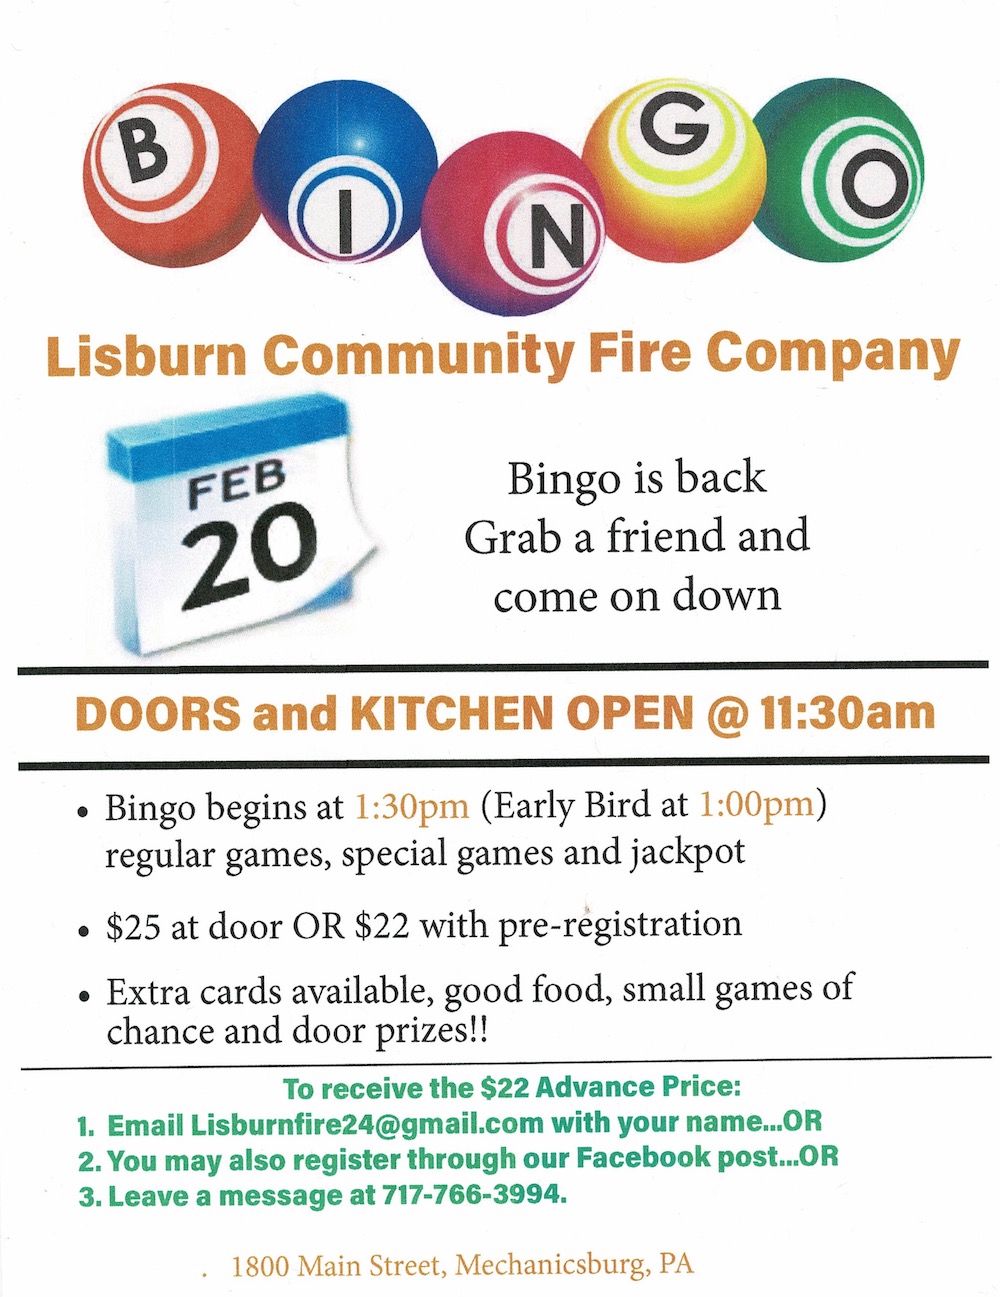 Bingo returns in February - Lisburn Community Fire Company